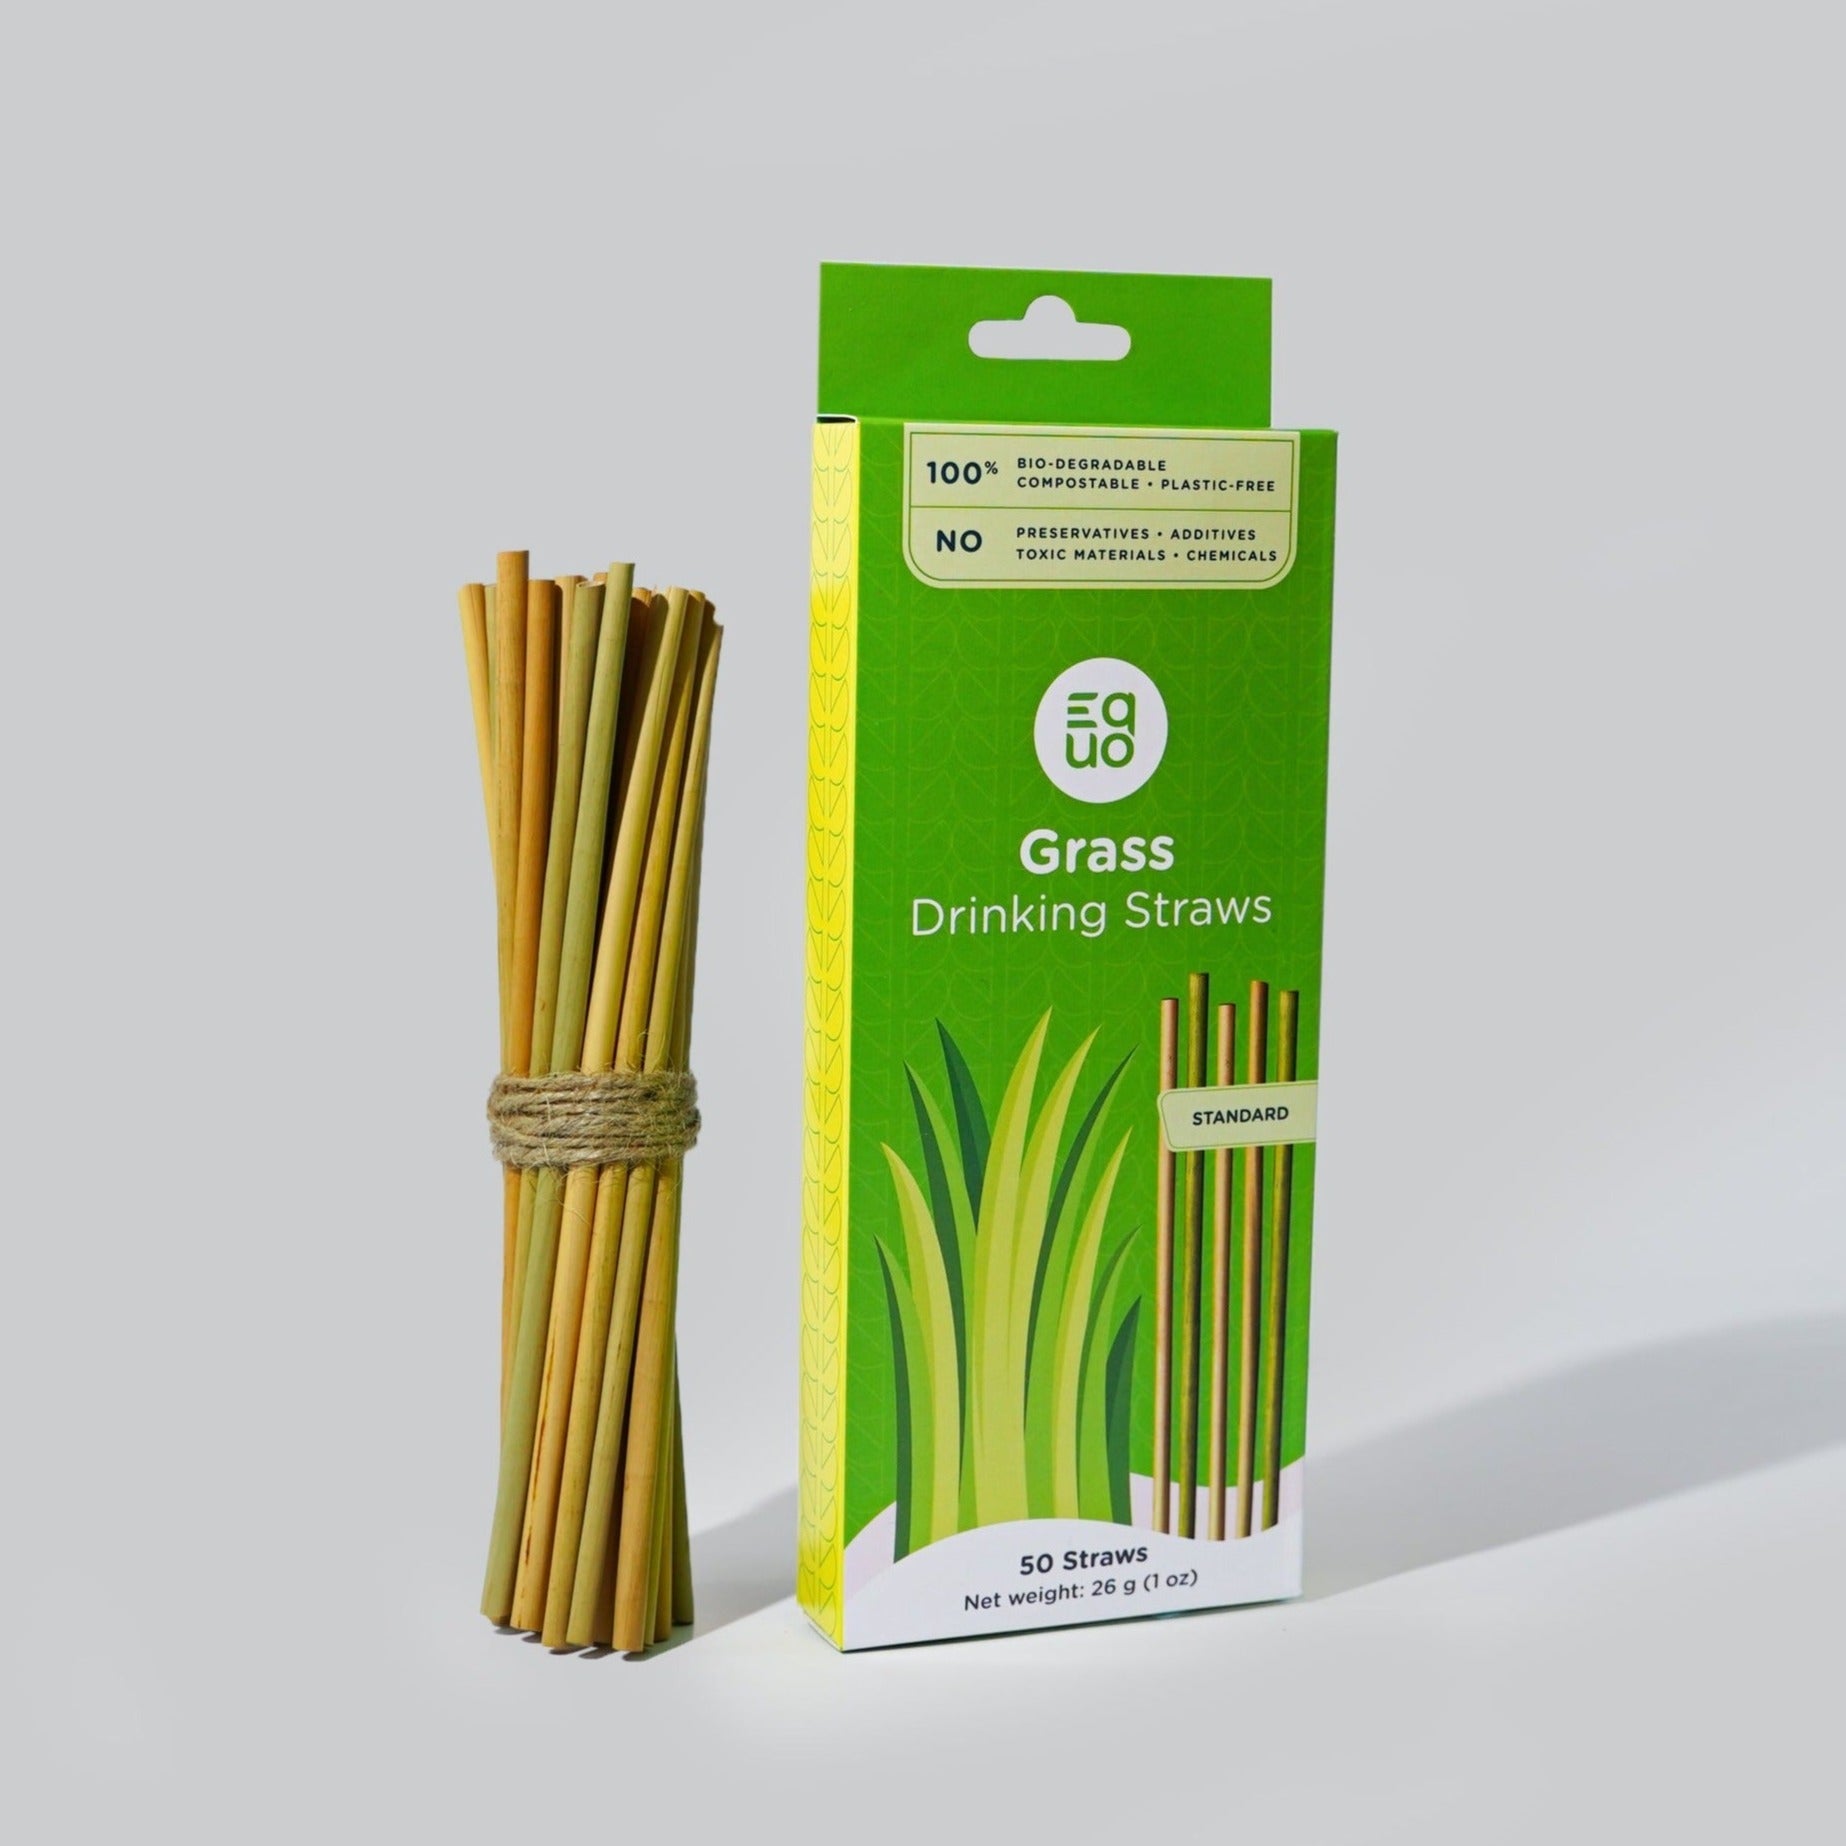 Grass Drinking Straws by EQUO